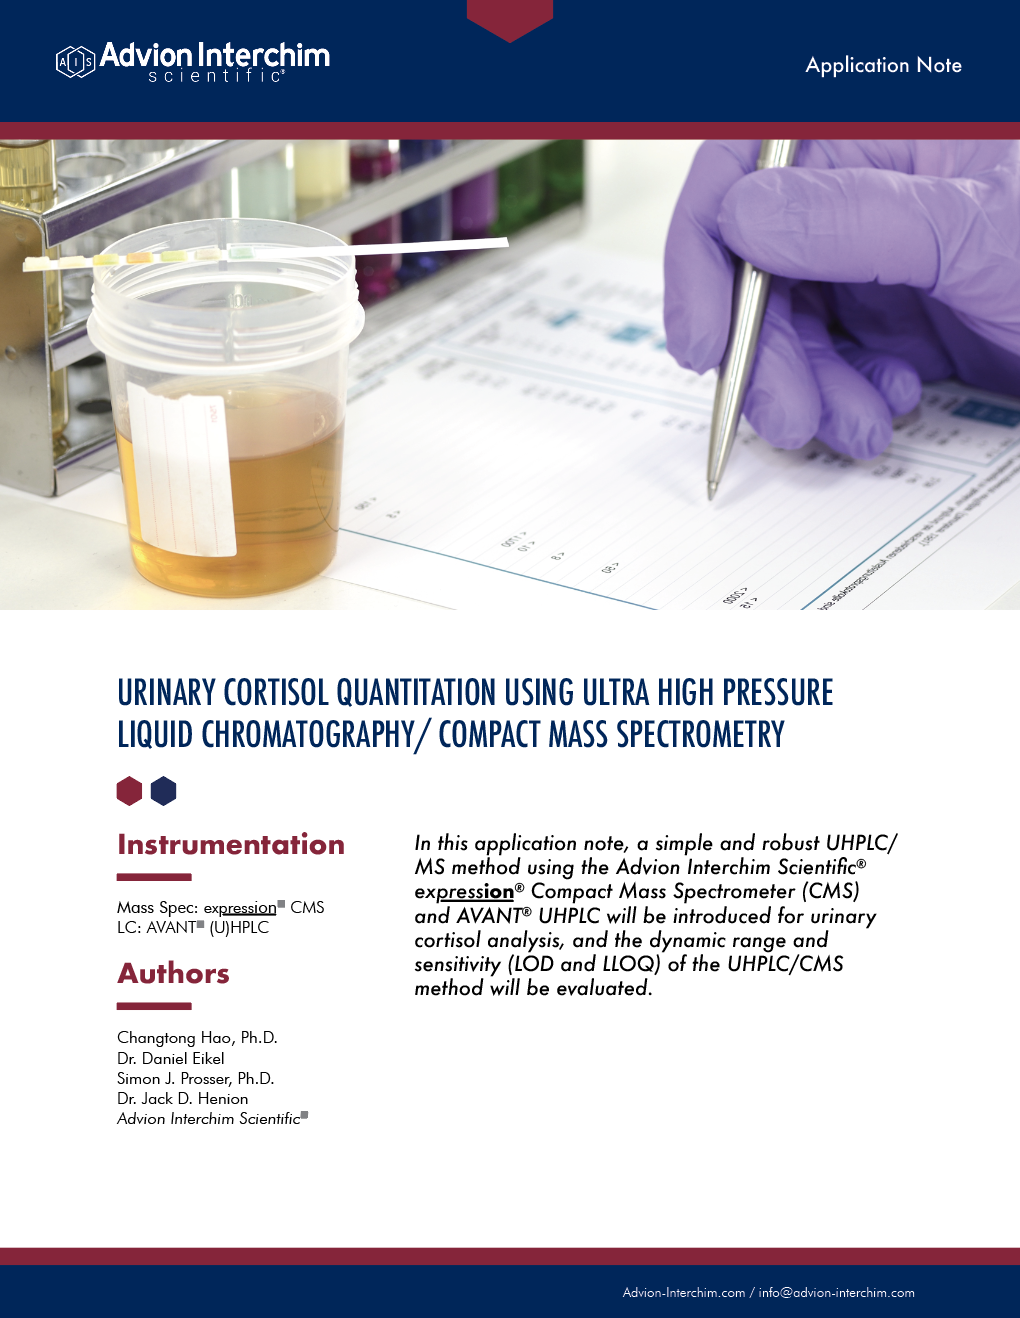 Urinary Cortisol Quantitation Using Ultra High Pressure Liquid Chromatography/Compact Mass Spectrometry